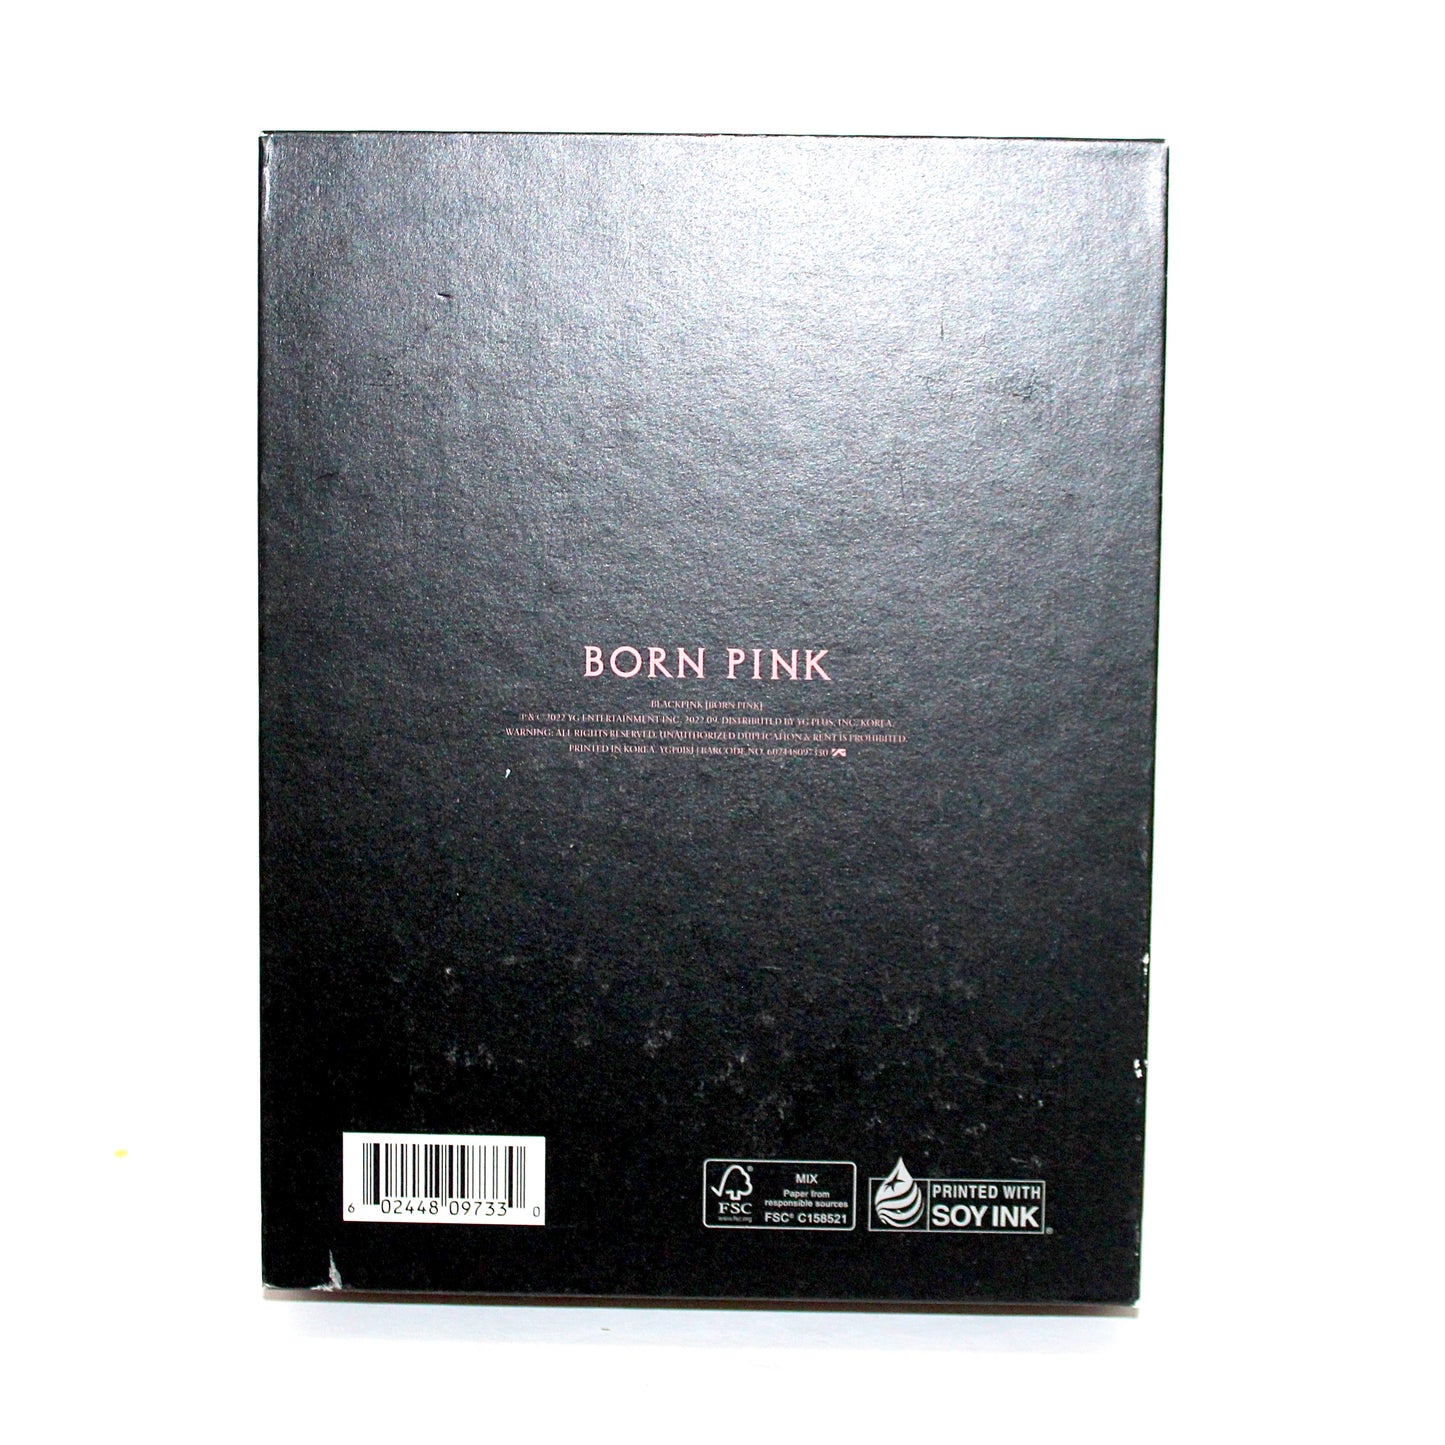 BLACKPINK 2nd Album: Born Pink | Pink Ver.